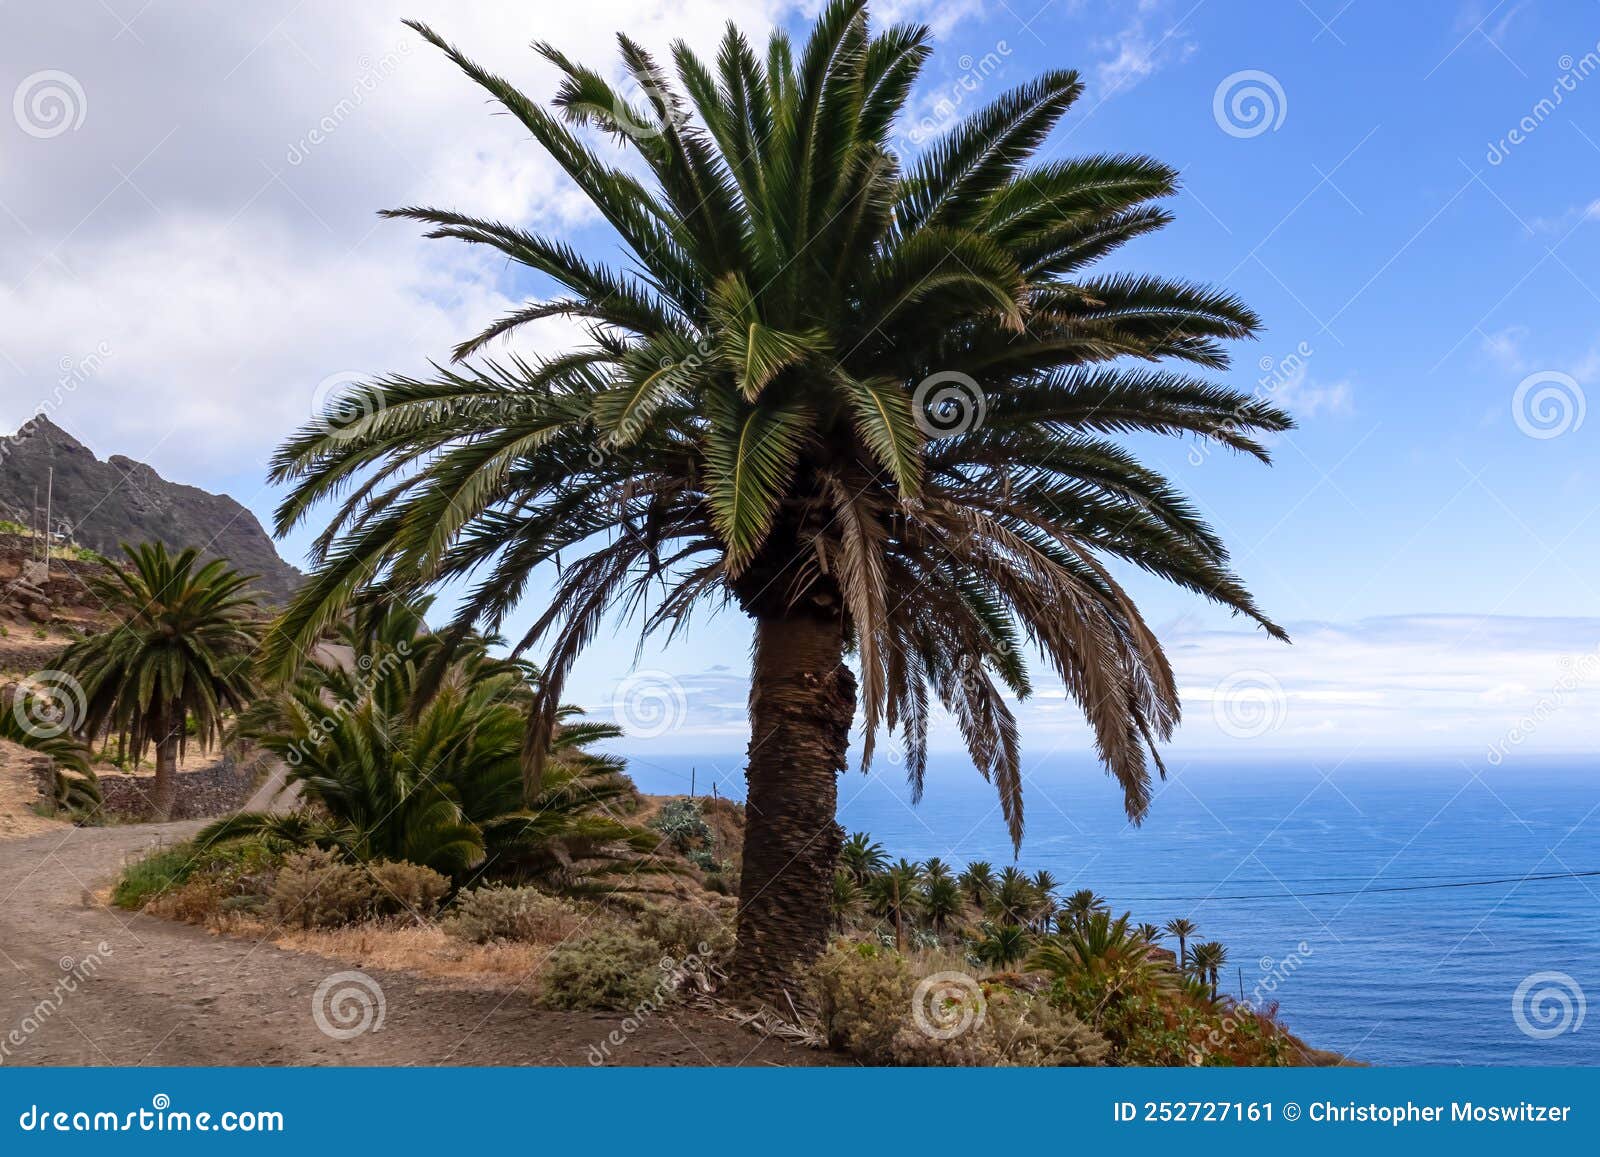 palm trees along the scenic coastal hiking trail in anaga mountain range on tenerife, canary islands, spain, europe